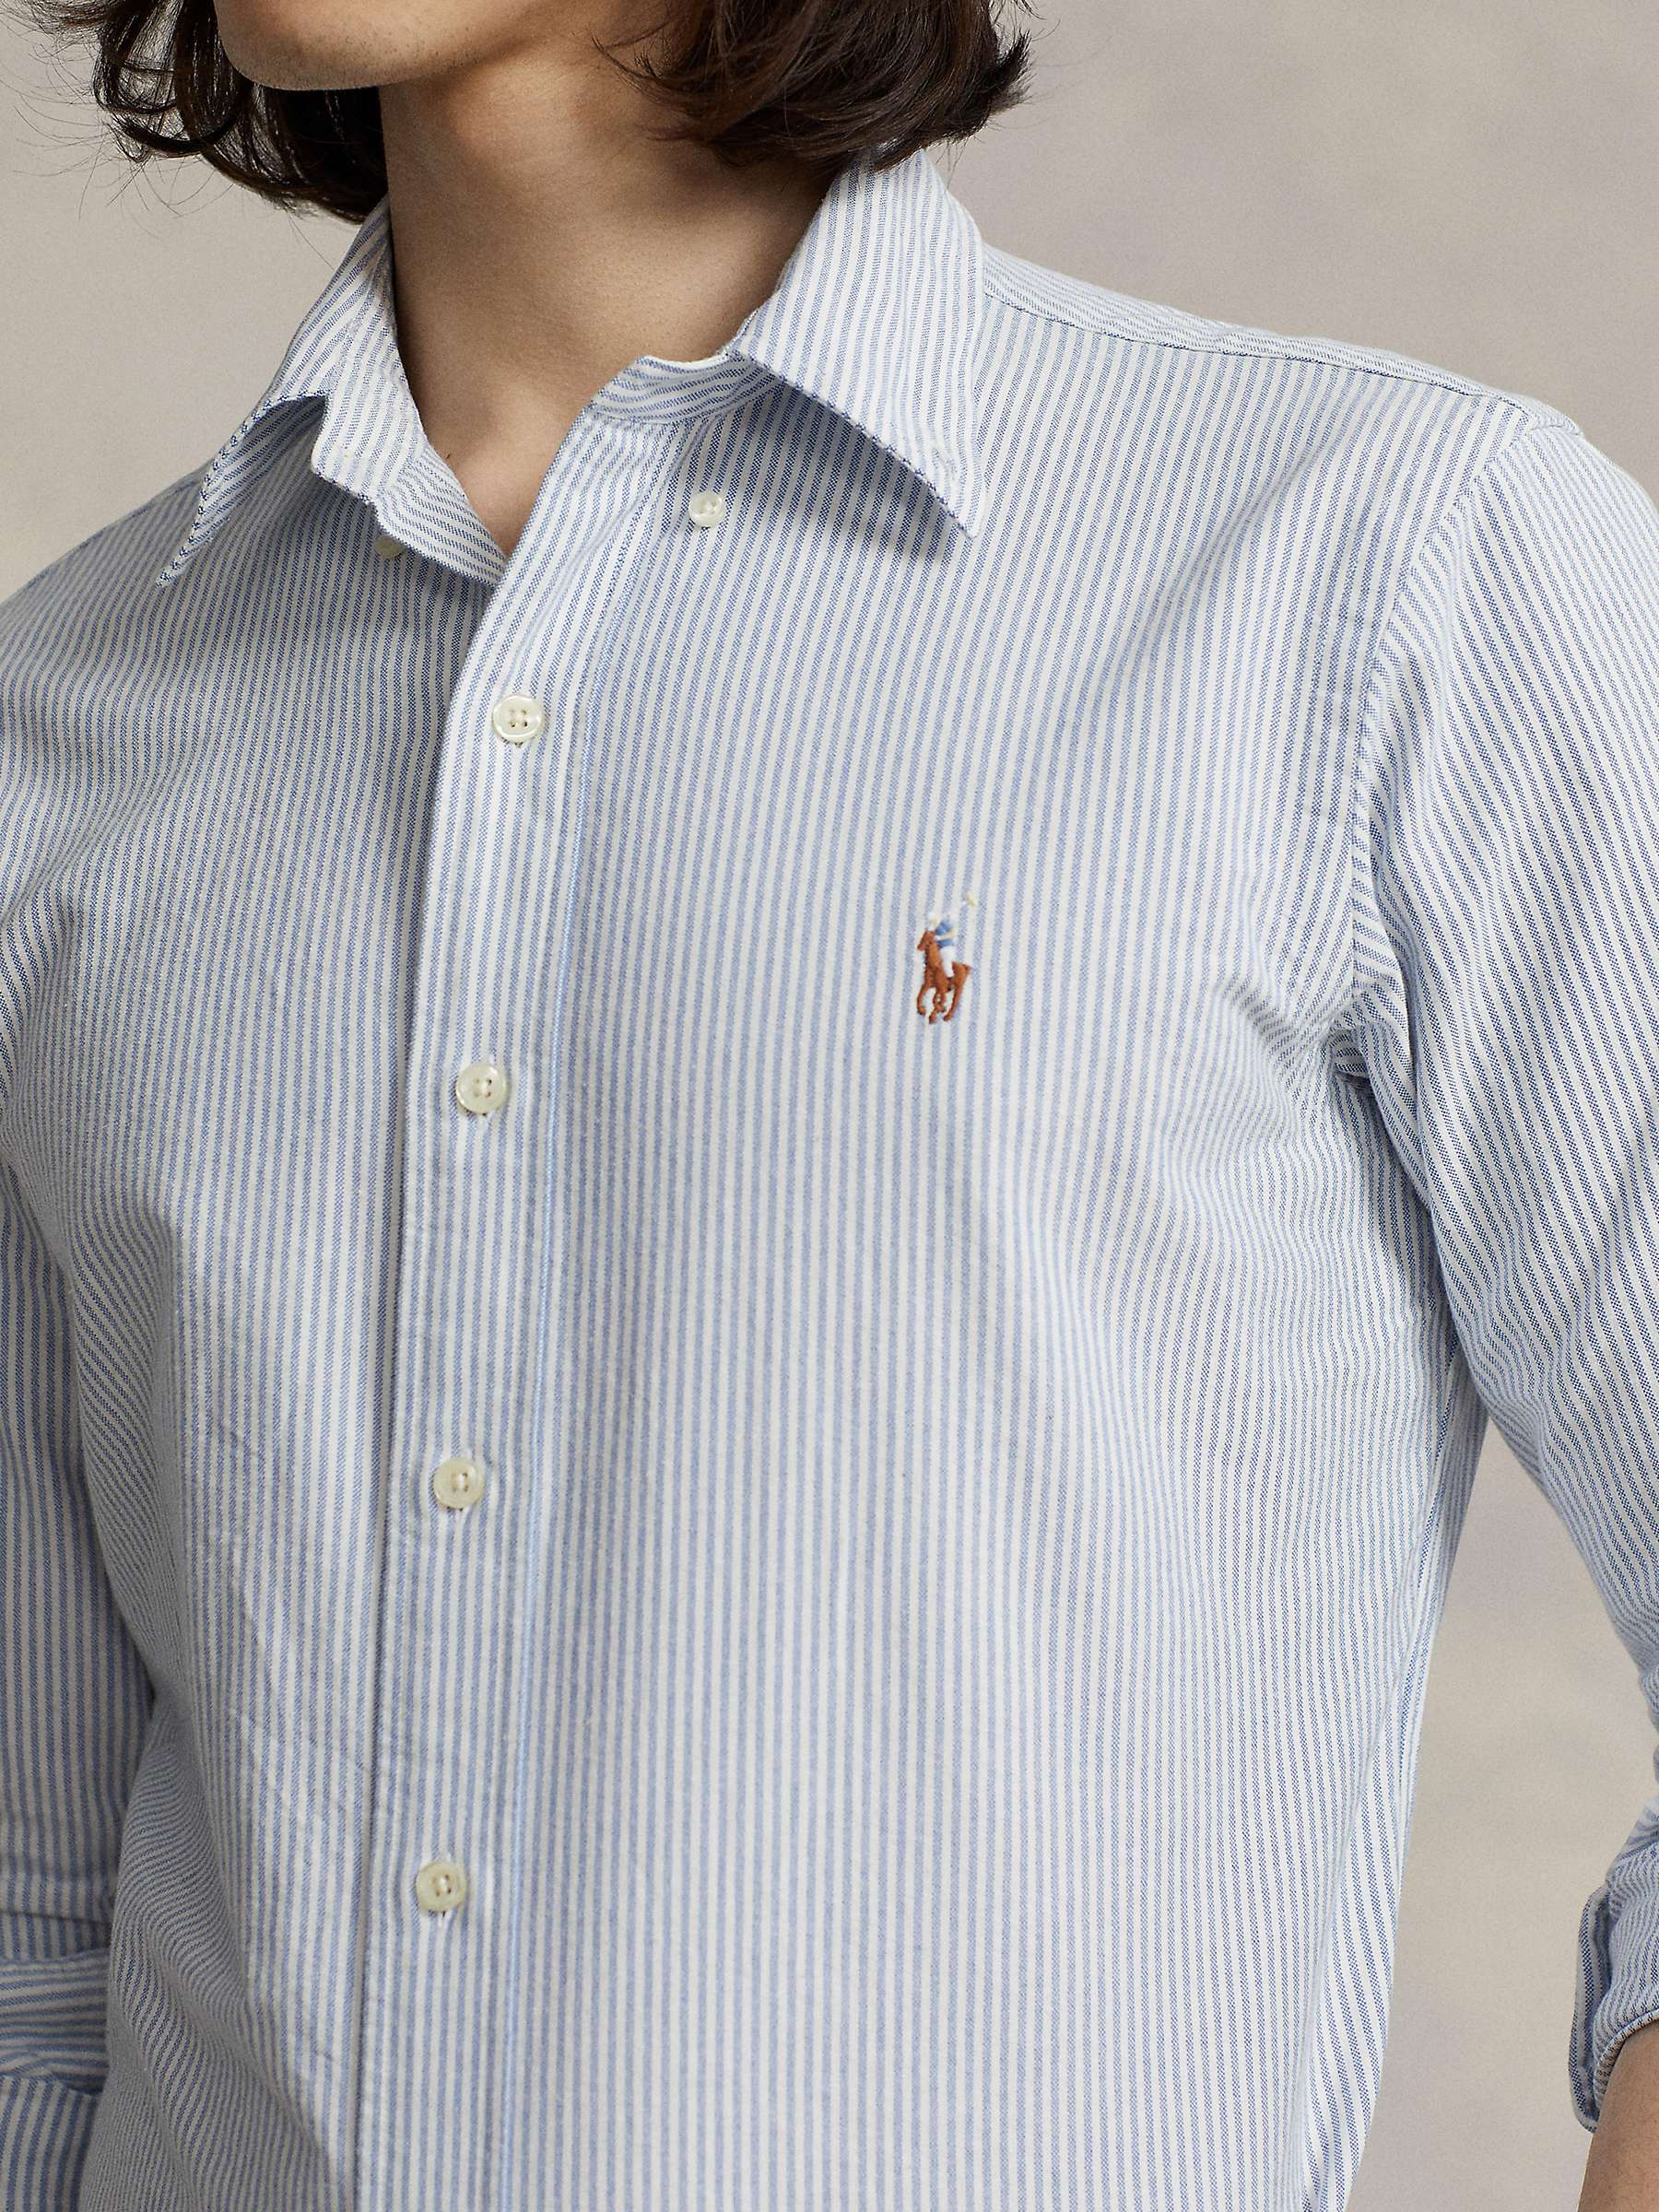 Buy Polo Ralph Lauren Custom Fit Oxford Shirt, Striped Blue/White Online at johnlewis.com